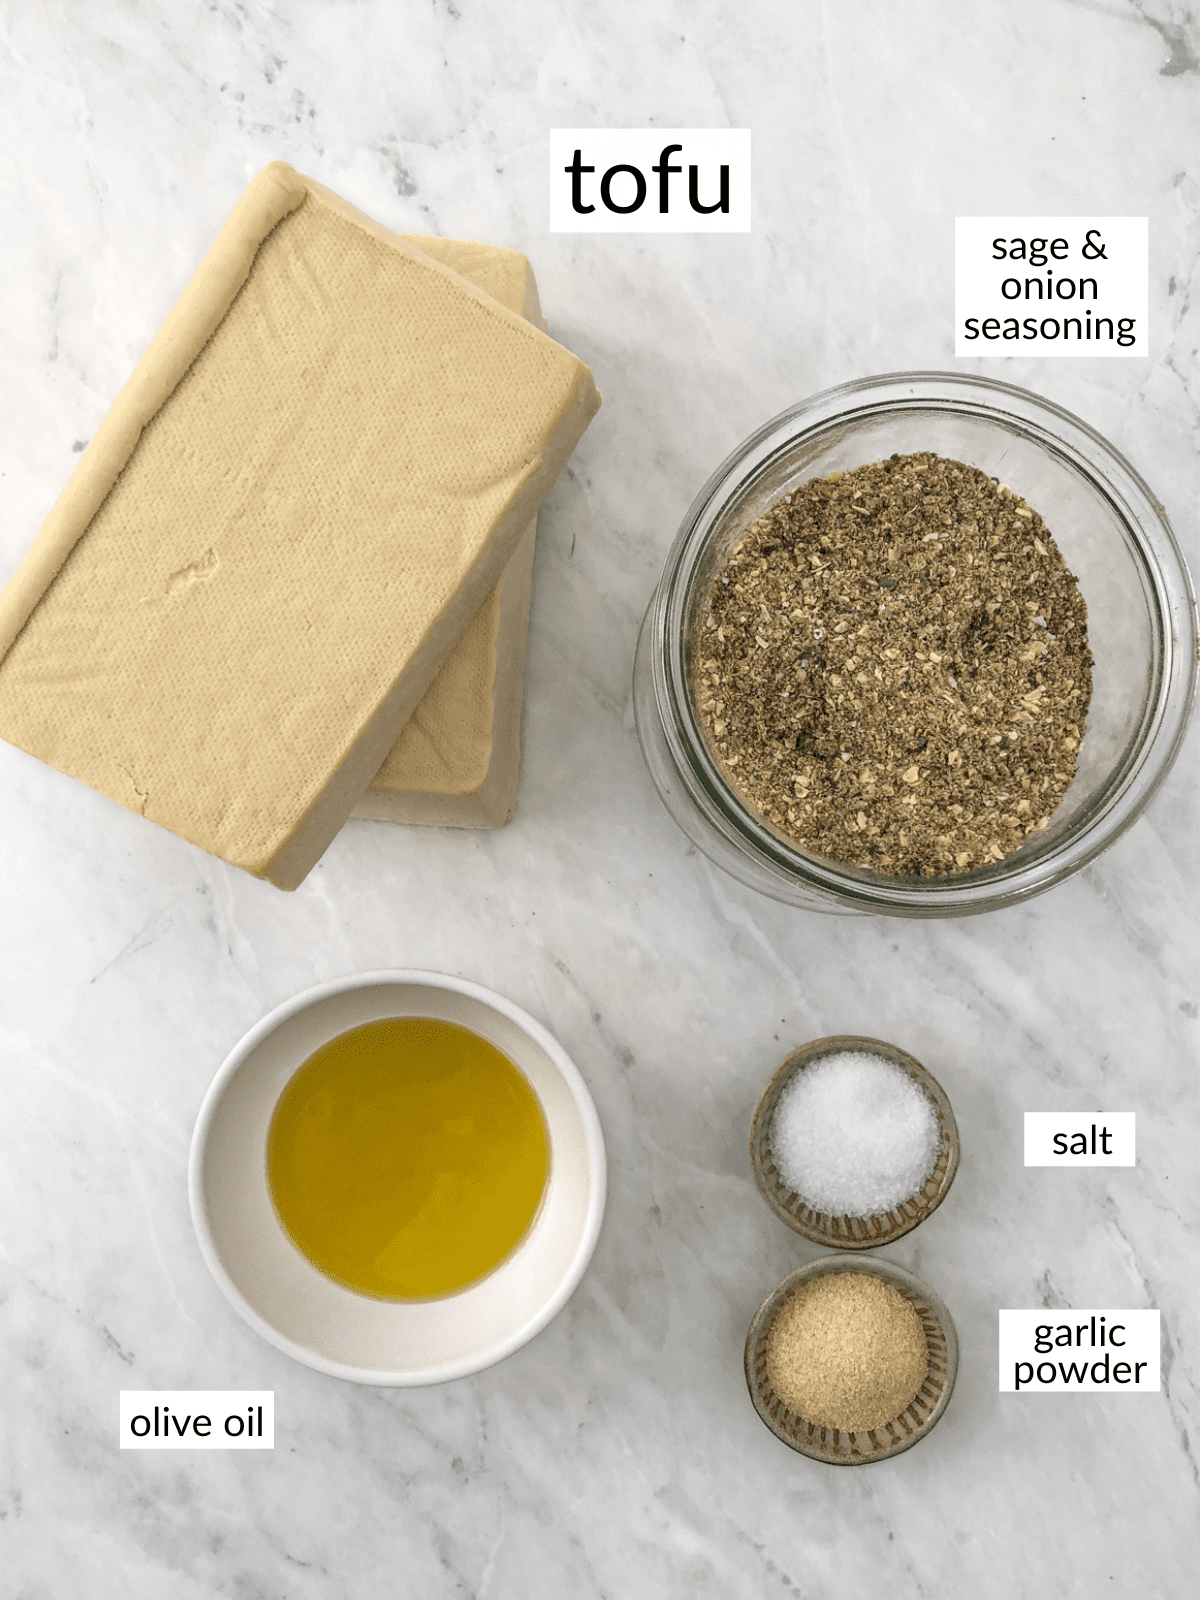 Tofu, turkey seasoning, oil and pots of salt and garlic powder.